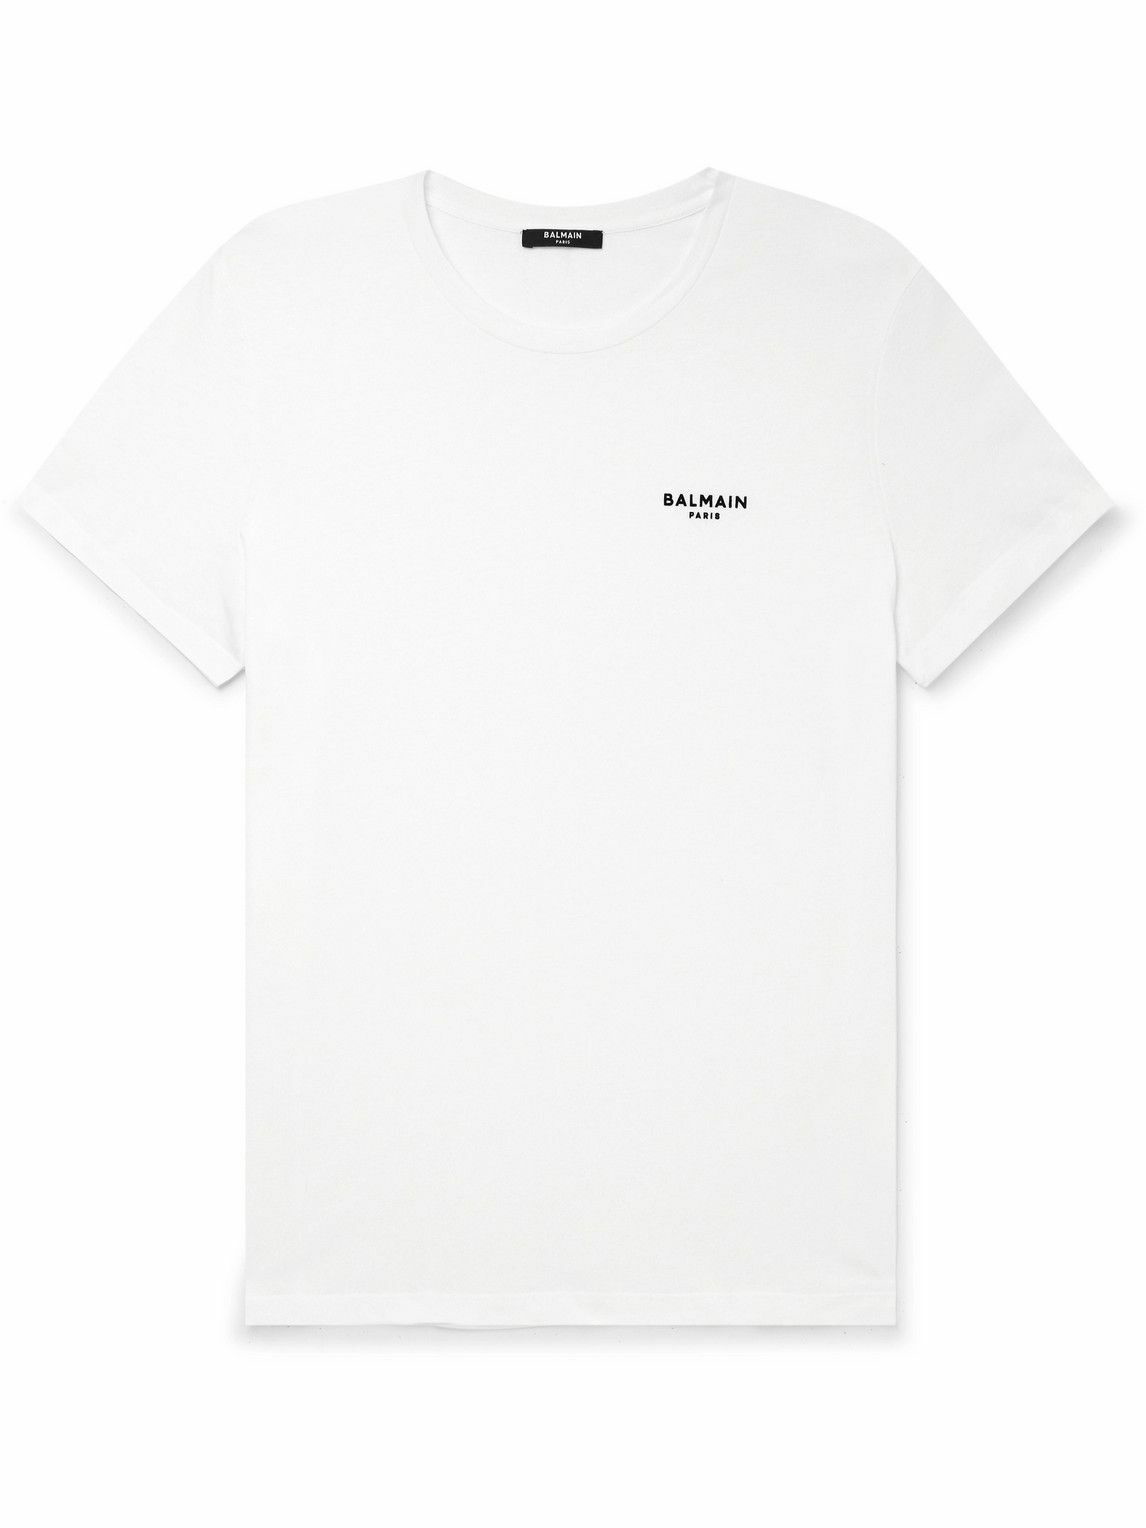 Balmain - Logo-Flocked Cotton-Jersey T-Shirt - White Balmain